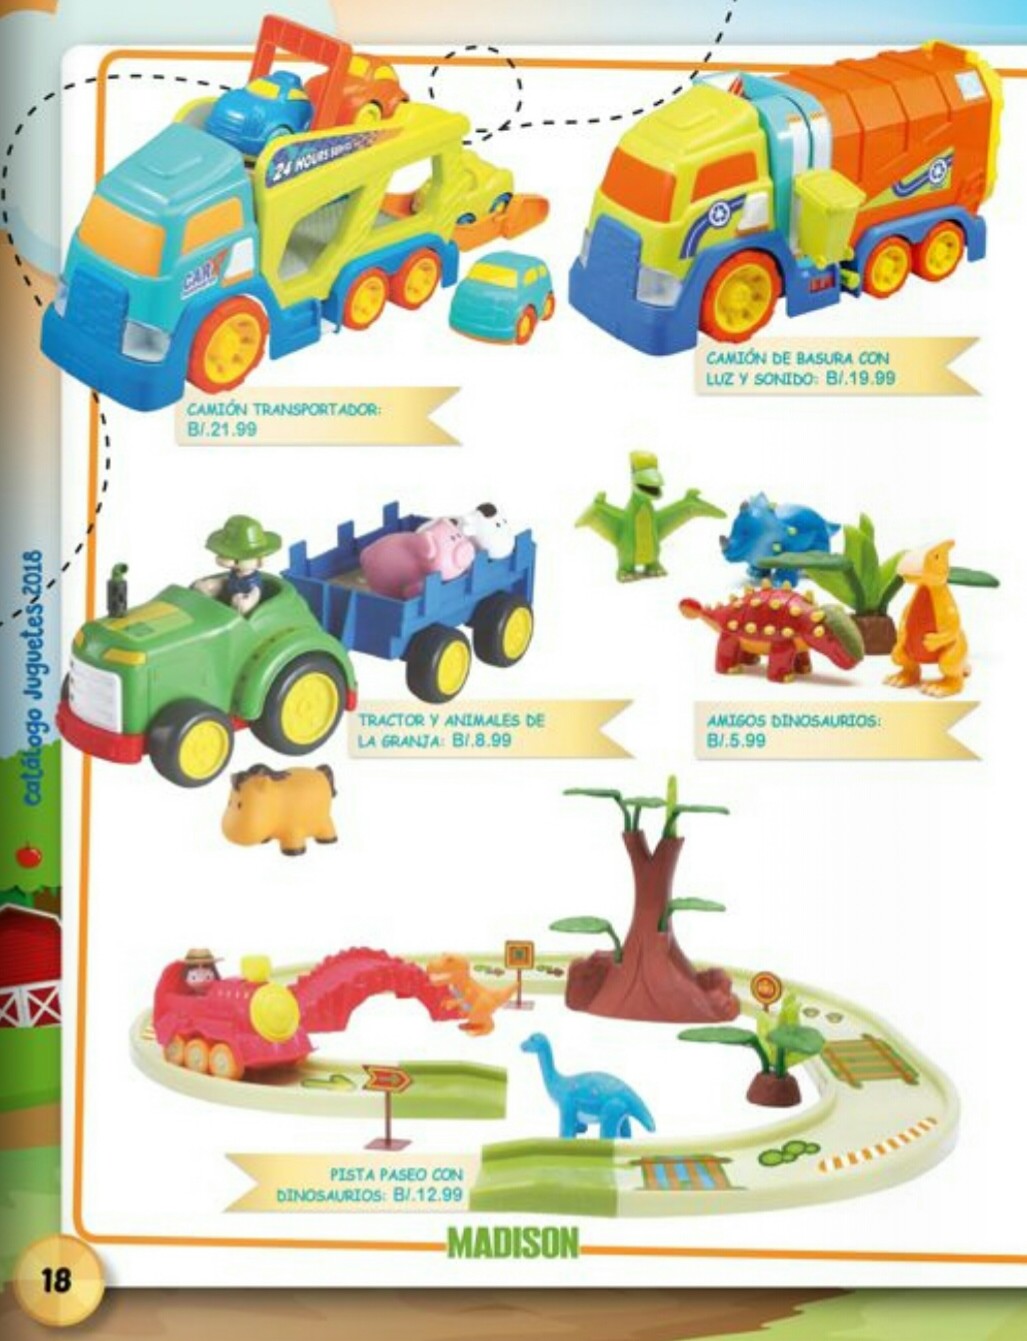 Catalogo juguetes madison store 2018 p17